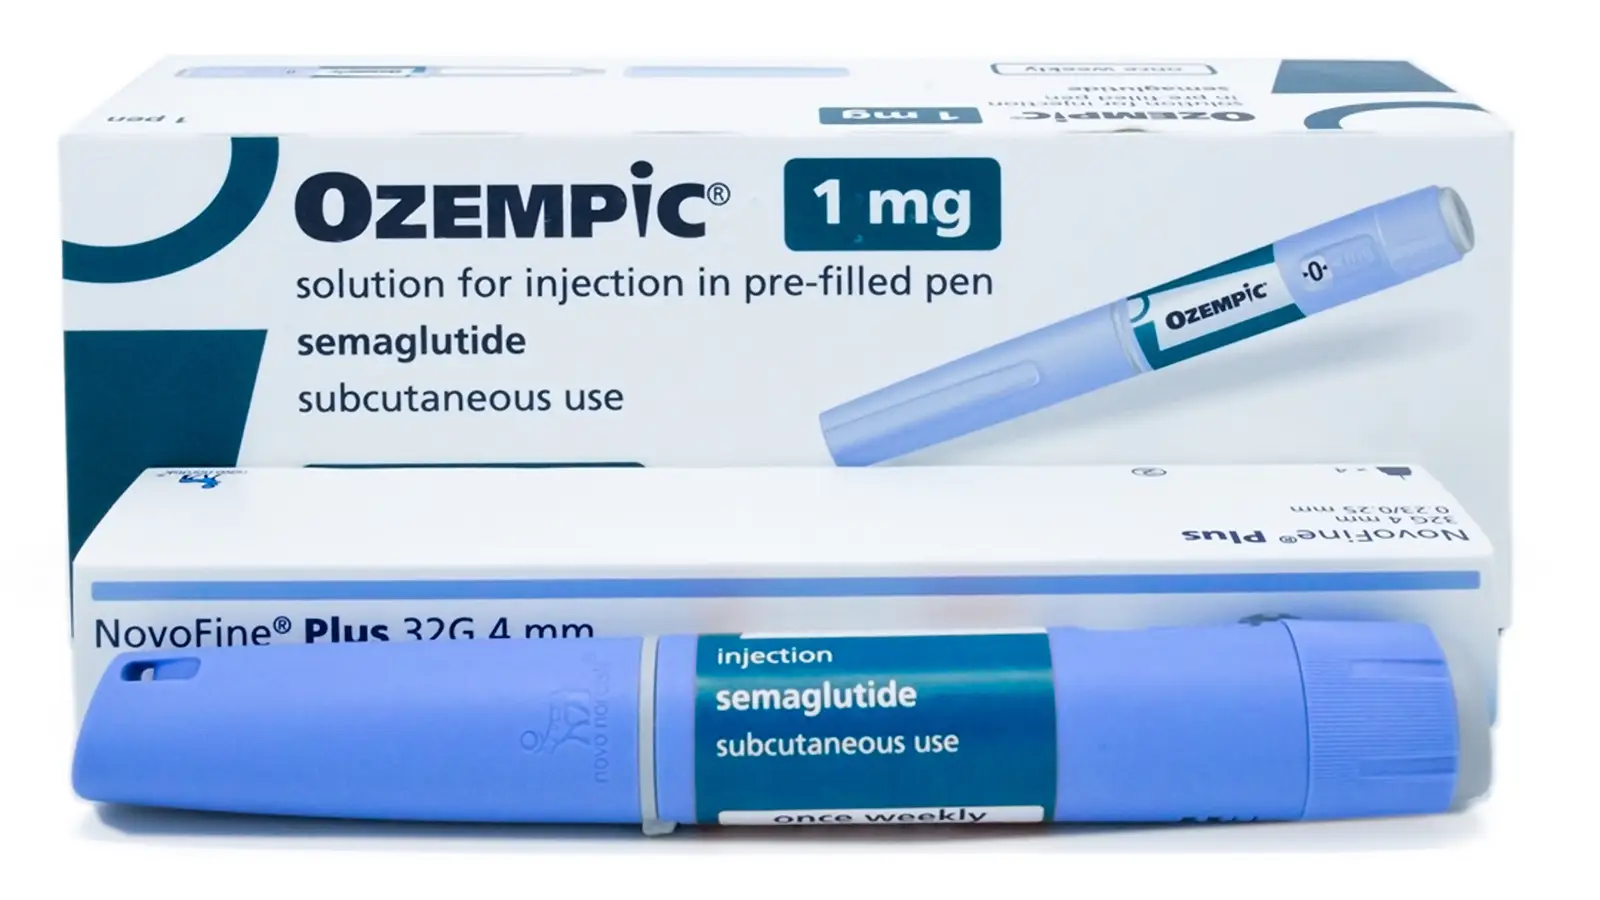 Ozempic 1 mg pen